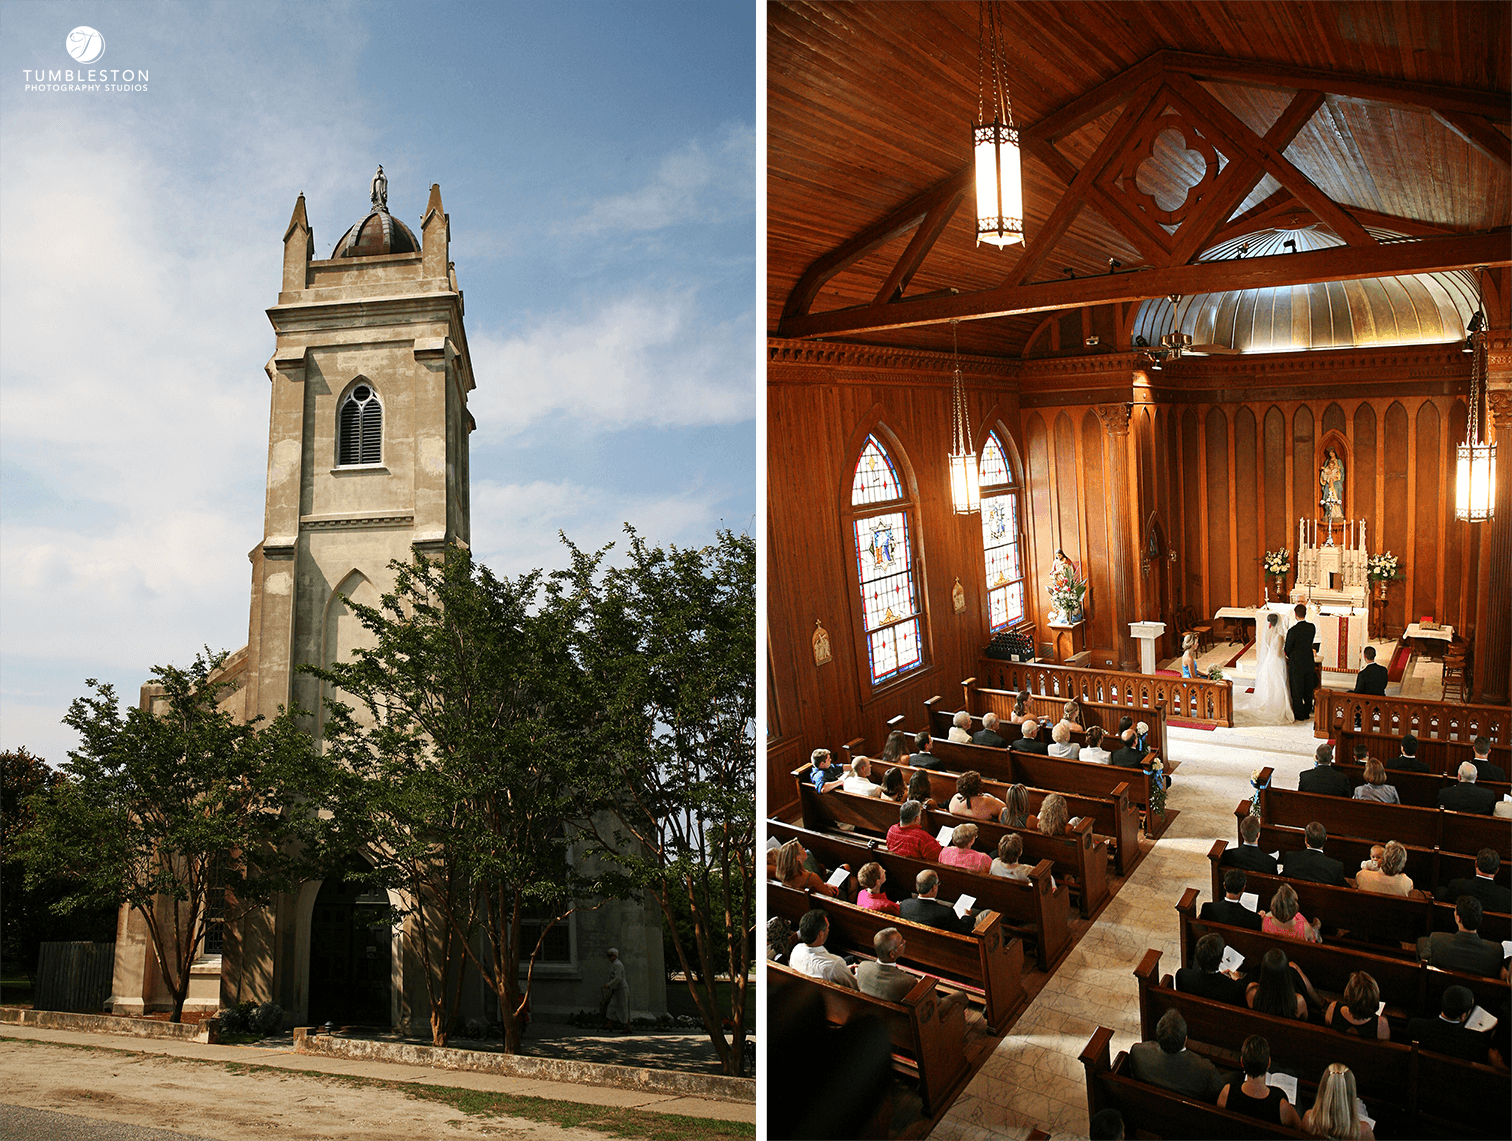 Wedding Chapels in Charleston, SC - Tumbleston Photography Studios